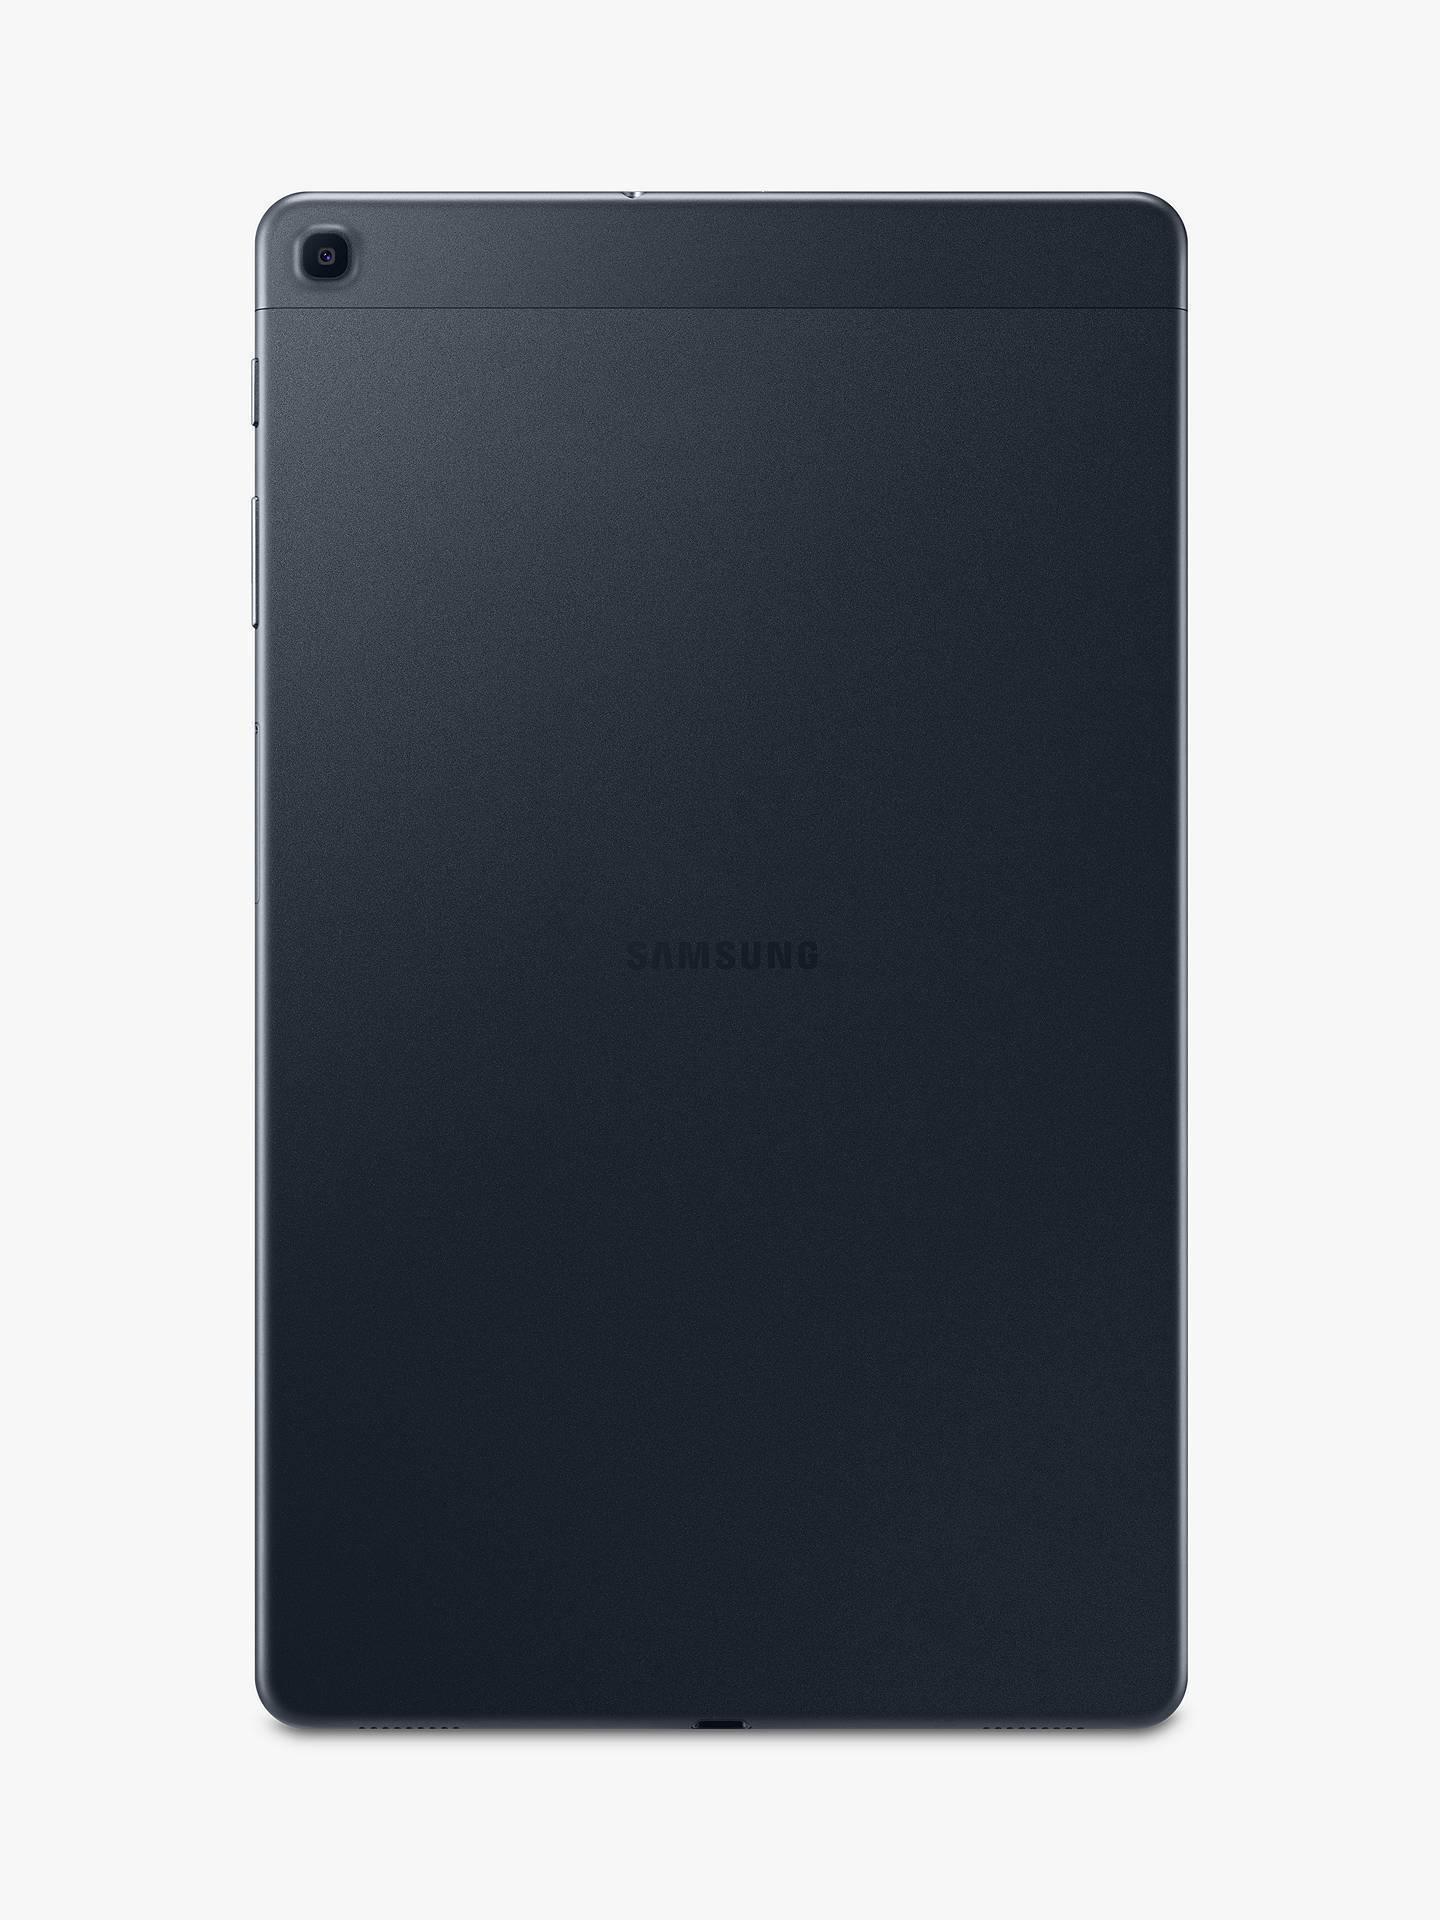 Samsung Galaxy Tab A (2019) 10.1″ Tablet, Android, 32GB, 2GB RAM, Wi-Fi, Black – Black